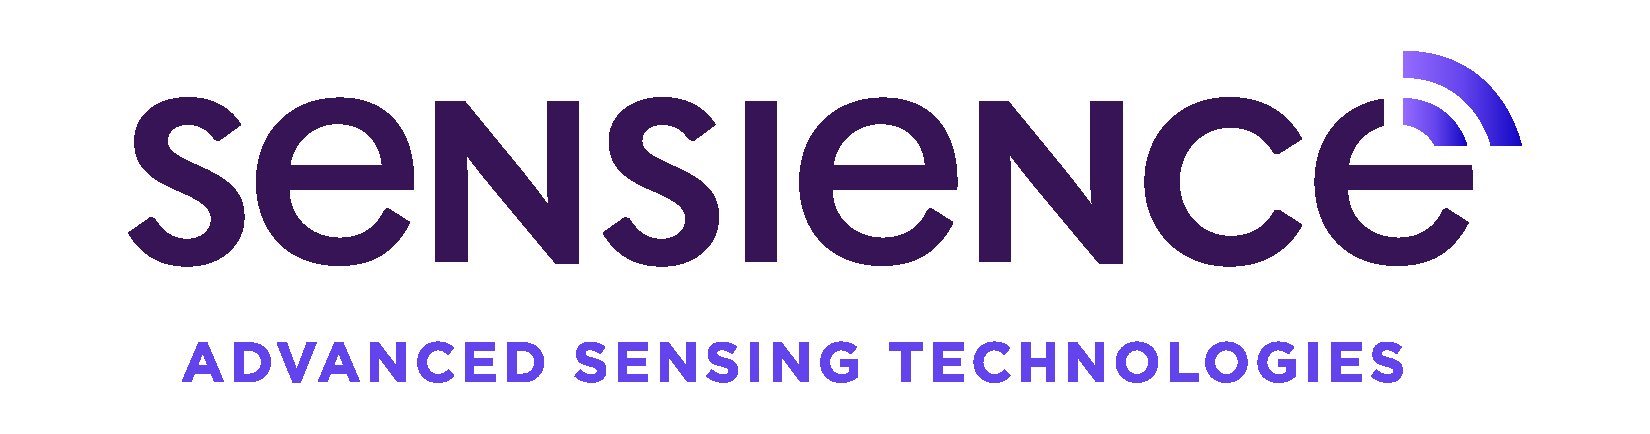 Sensience logo